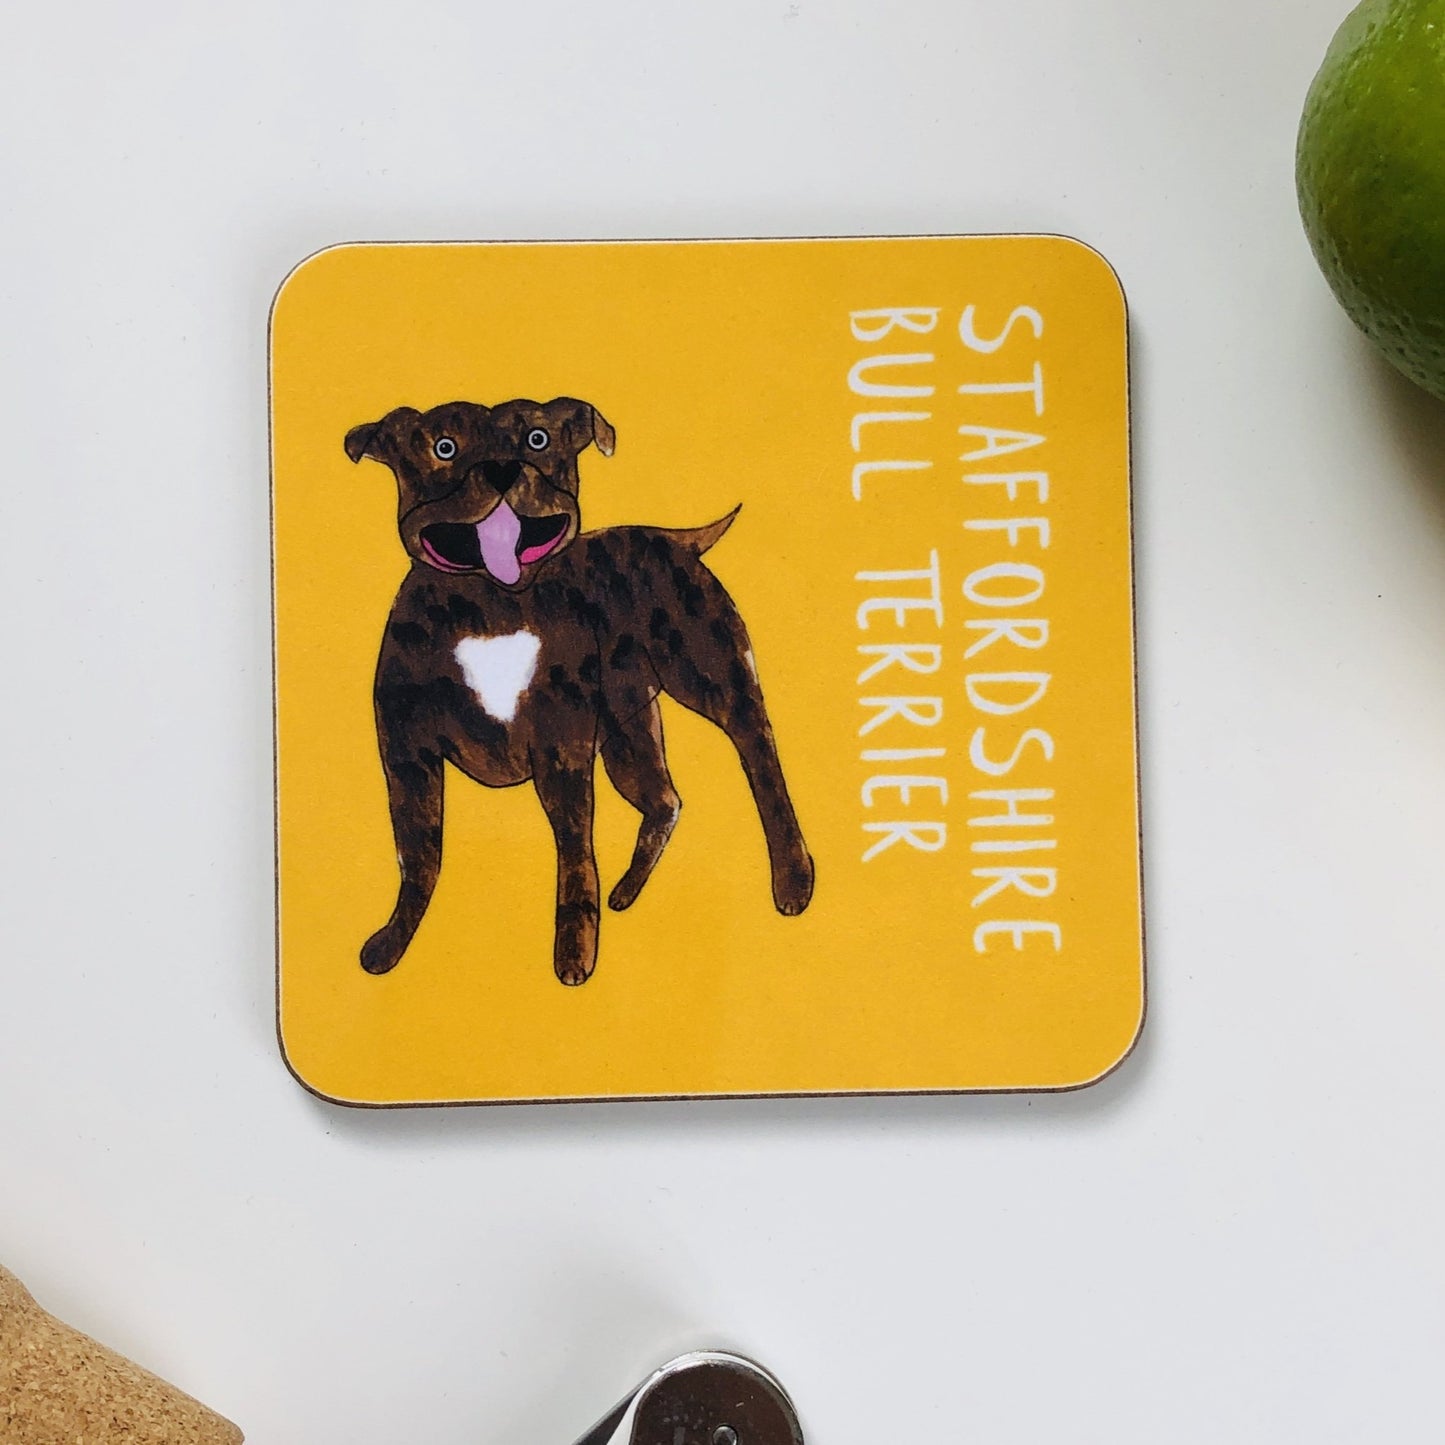 Illustrated Staffordshire Bull Terrier drinks coaster